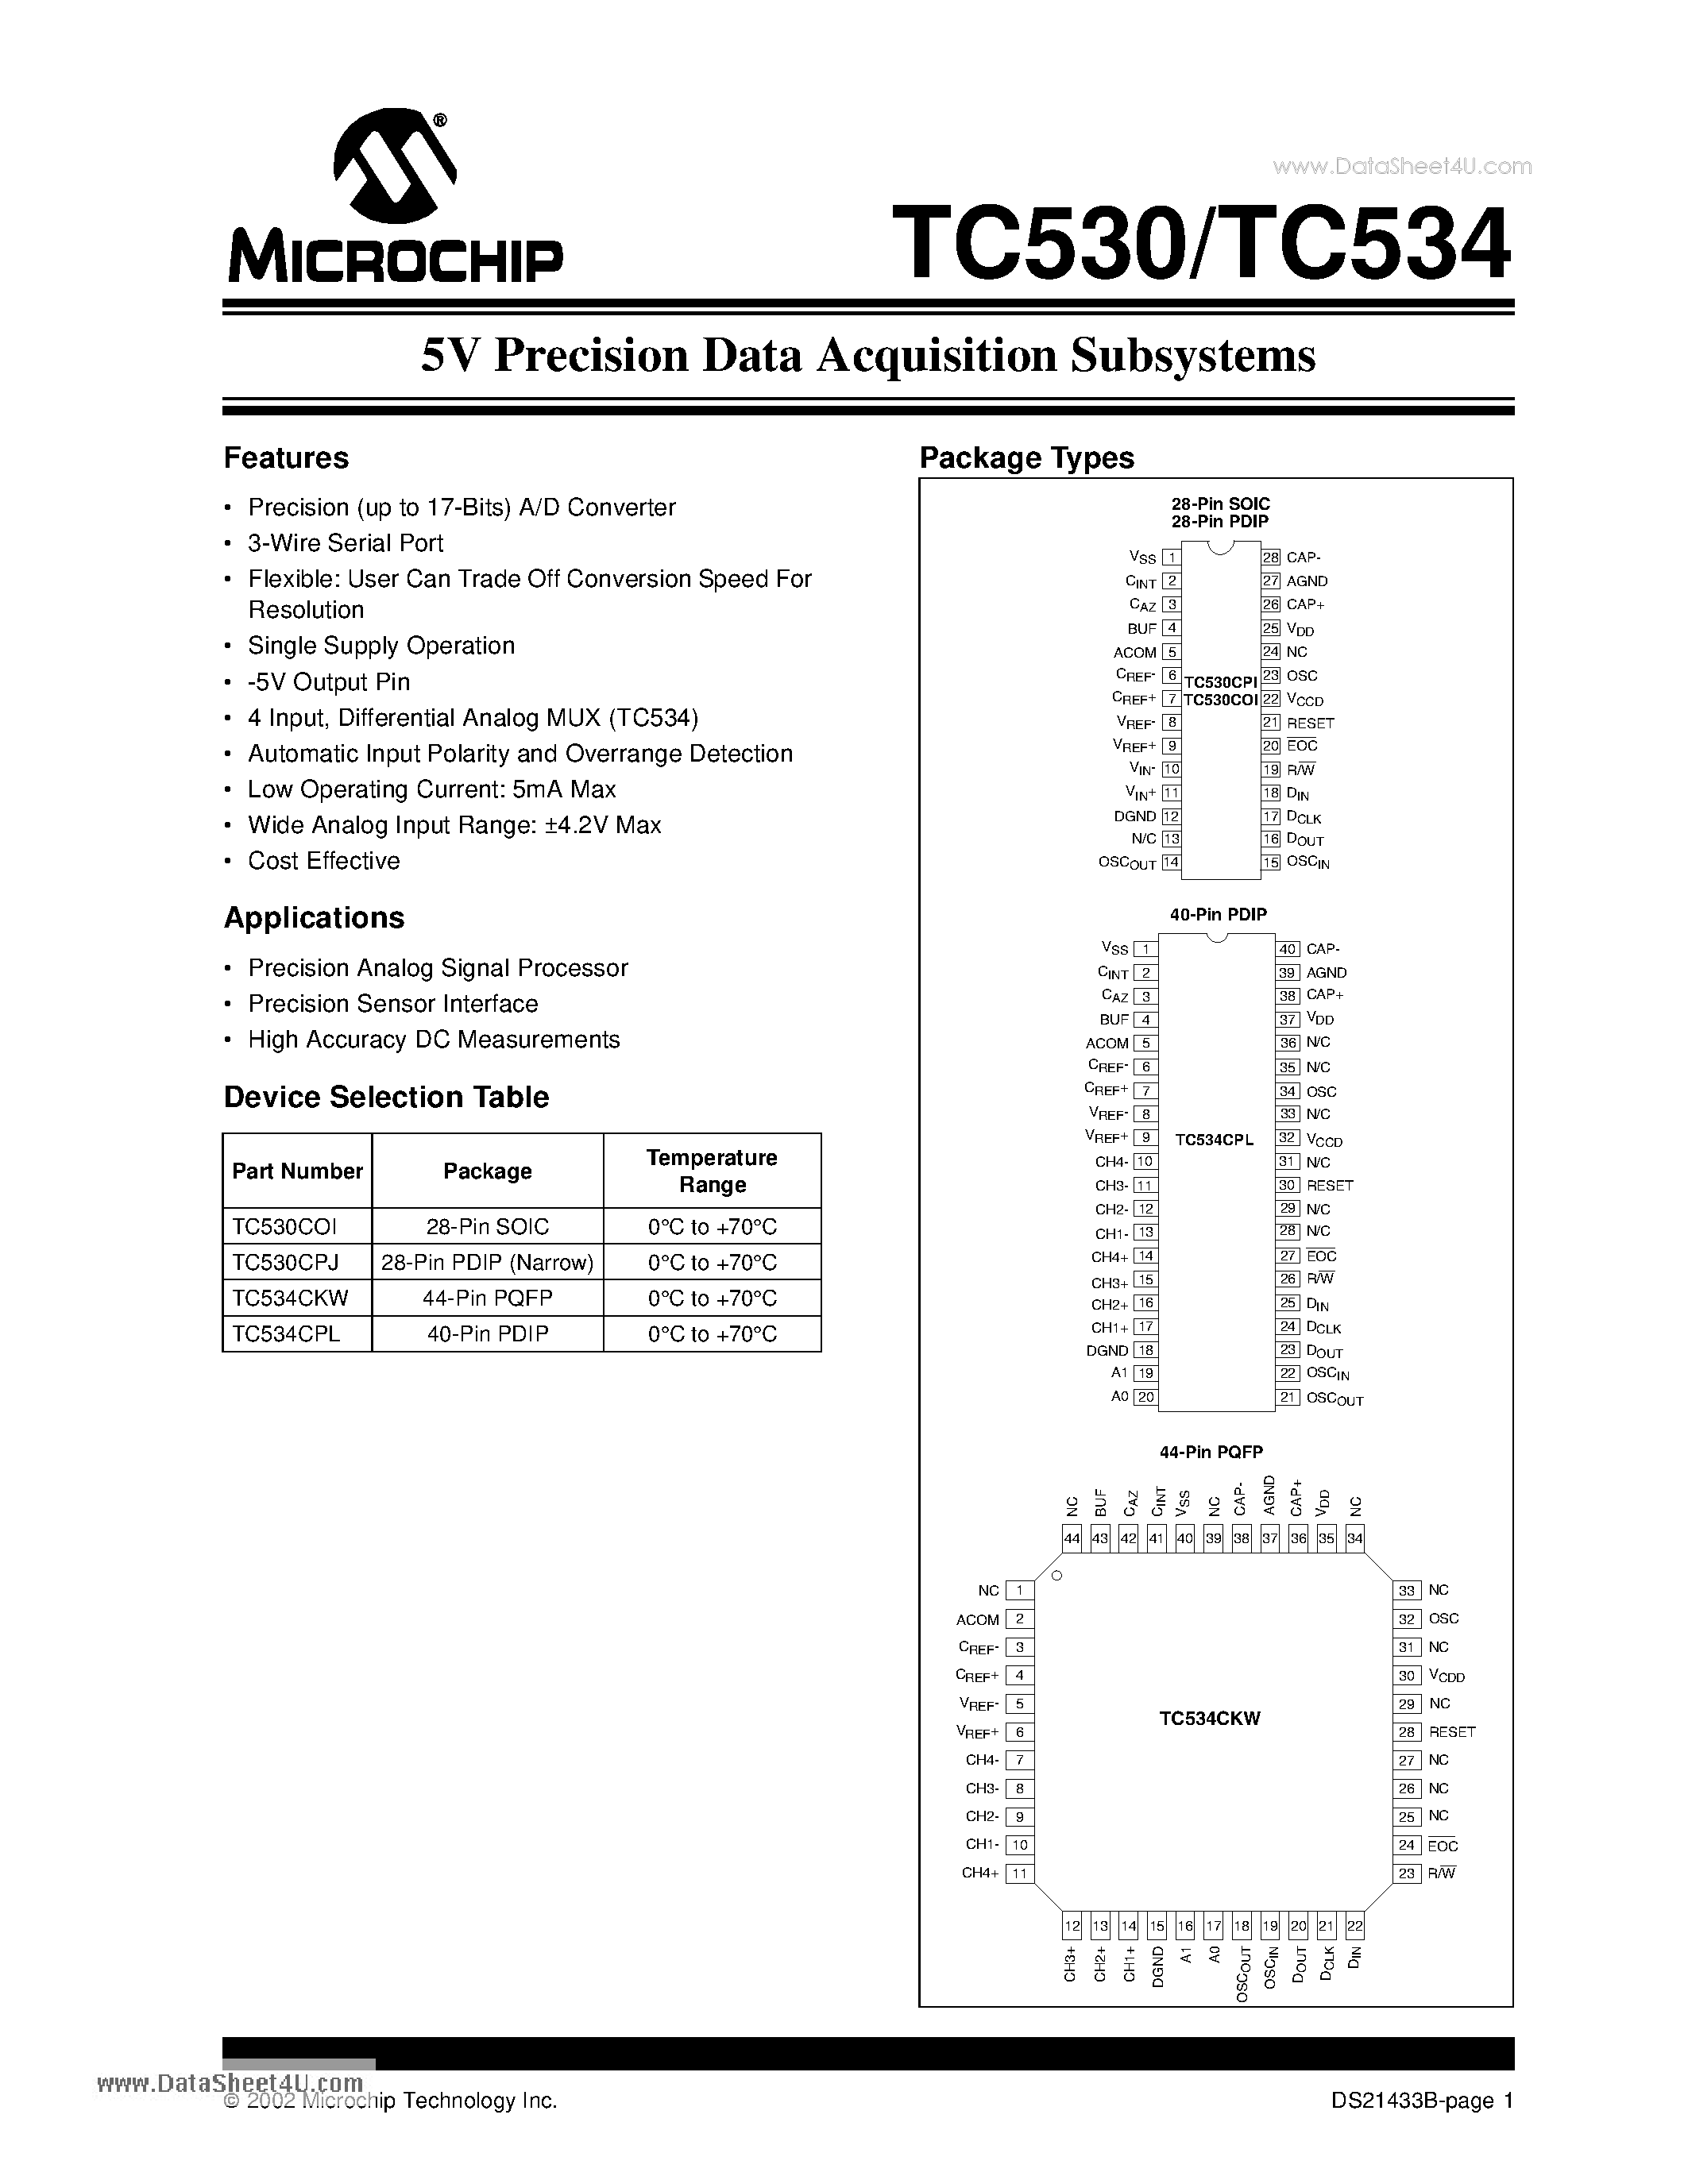 Datasheet TC530 - (TC530 / TC534) 5V Precision Data Acquisition Subsystems page 1